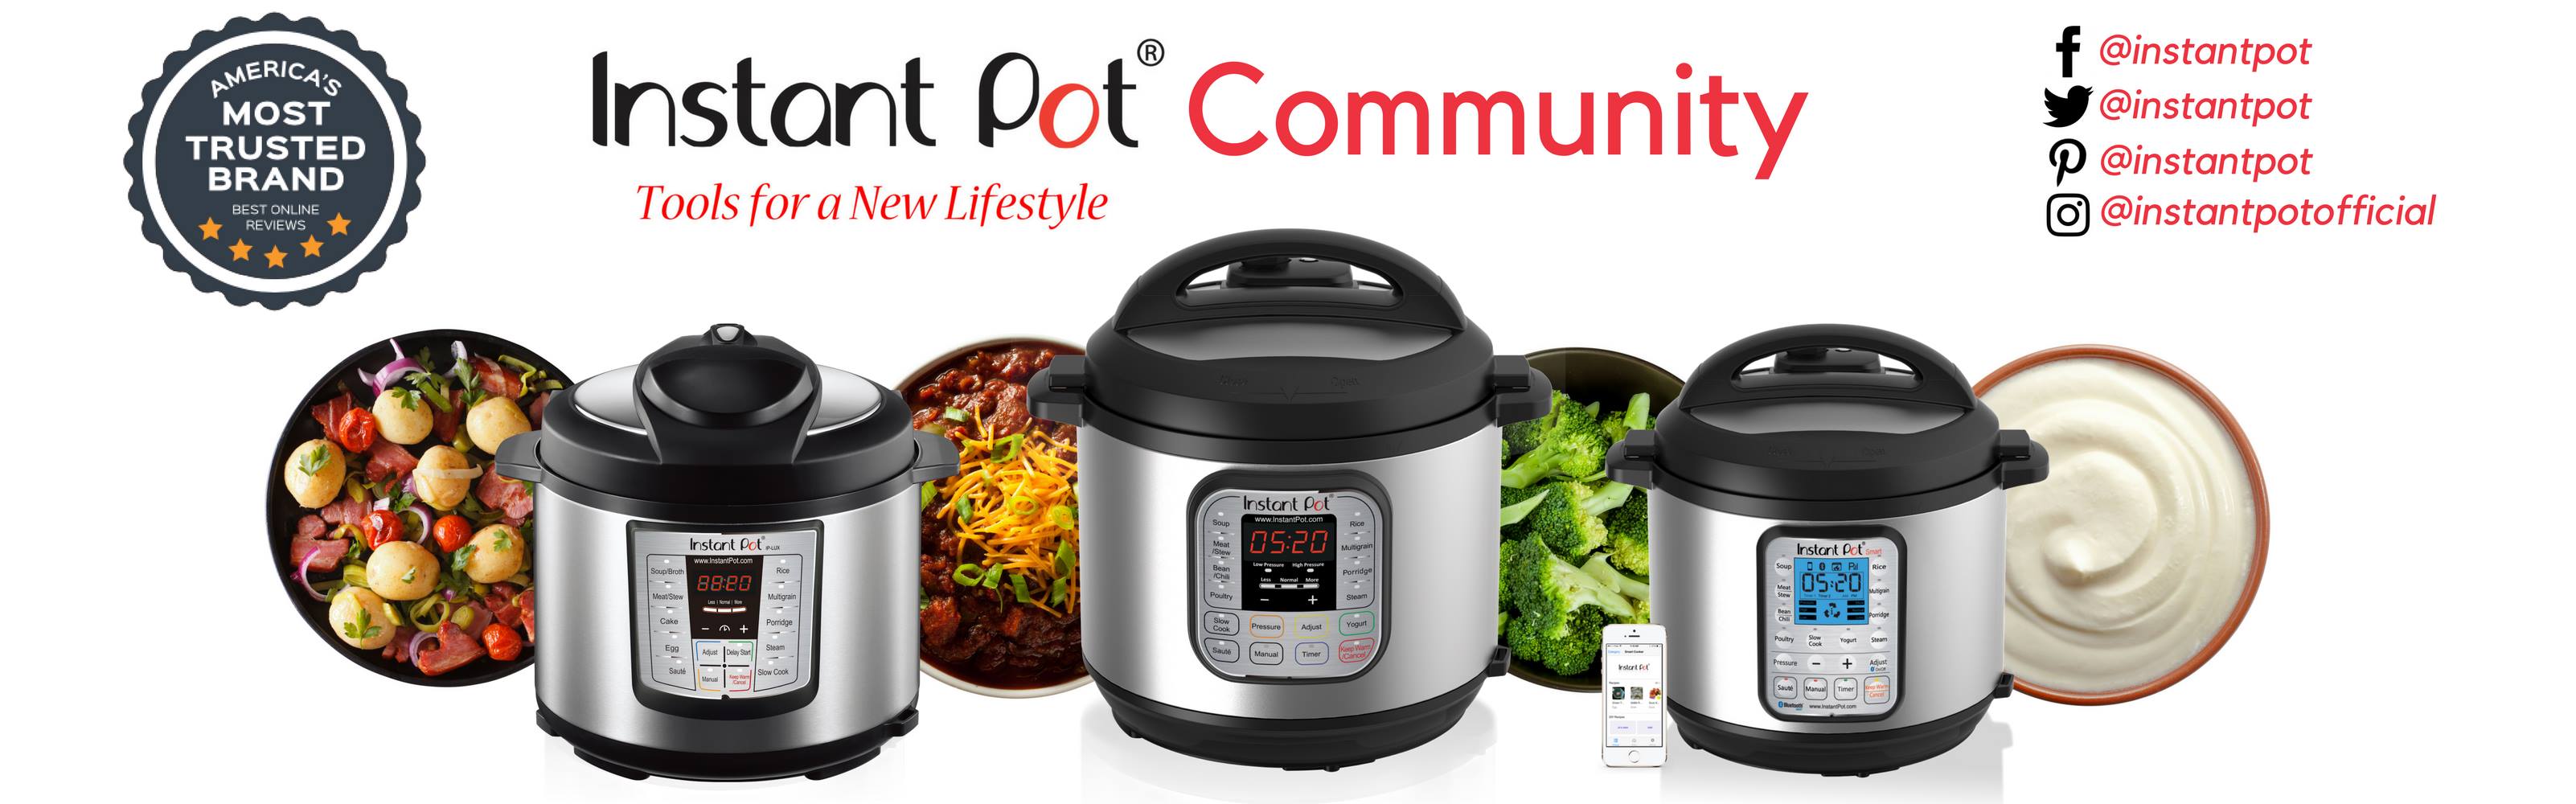 instant pot community